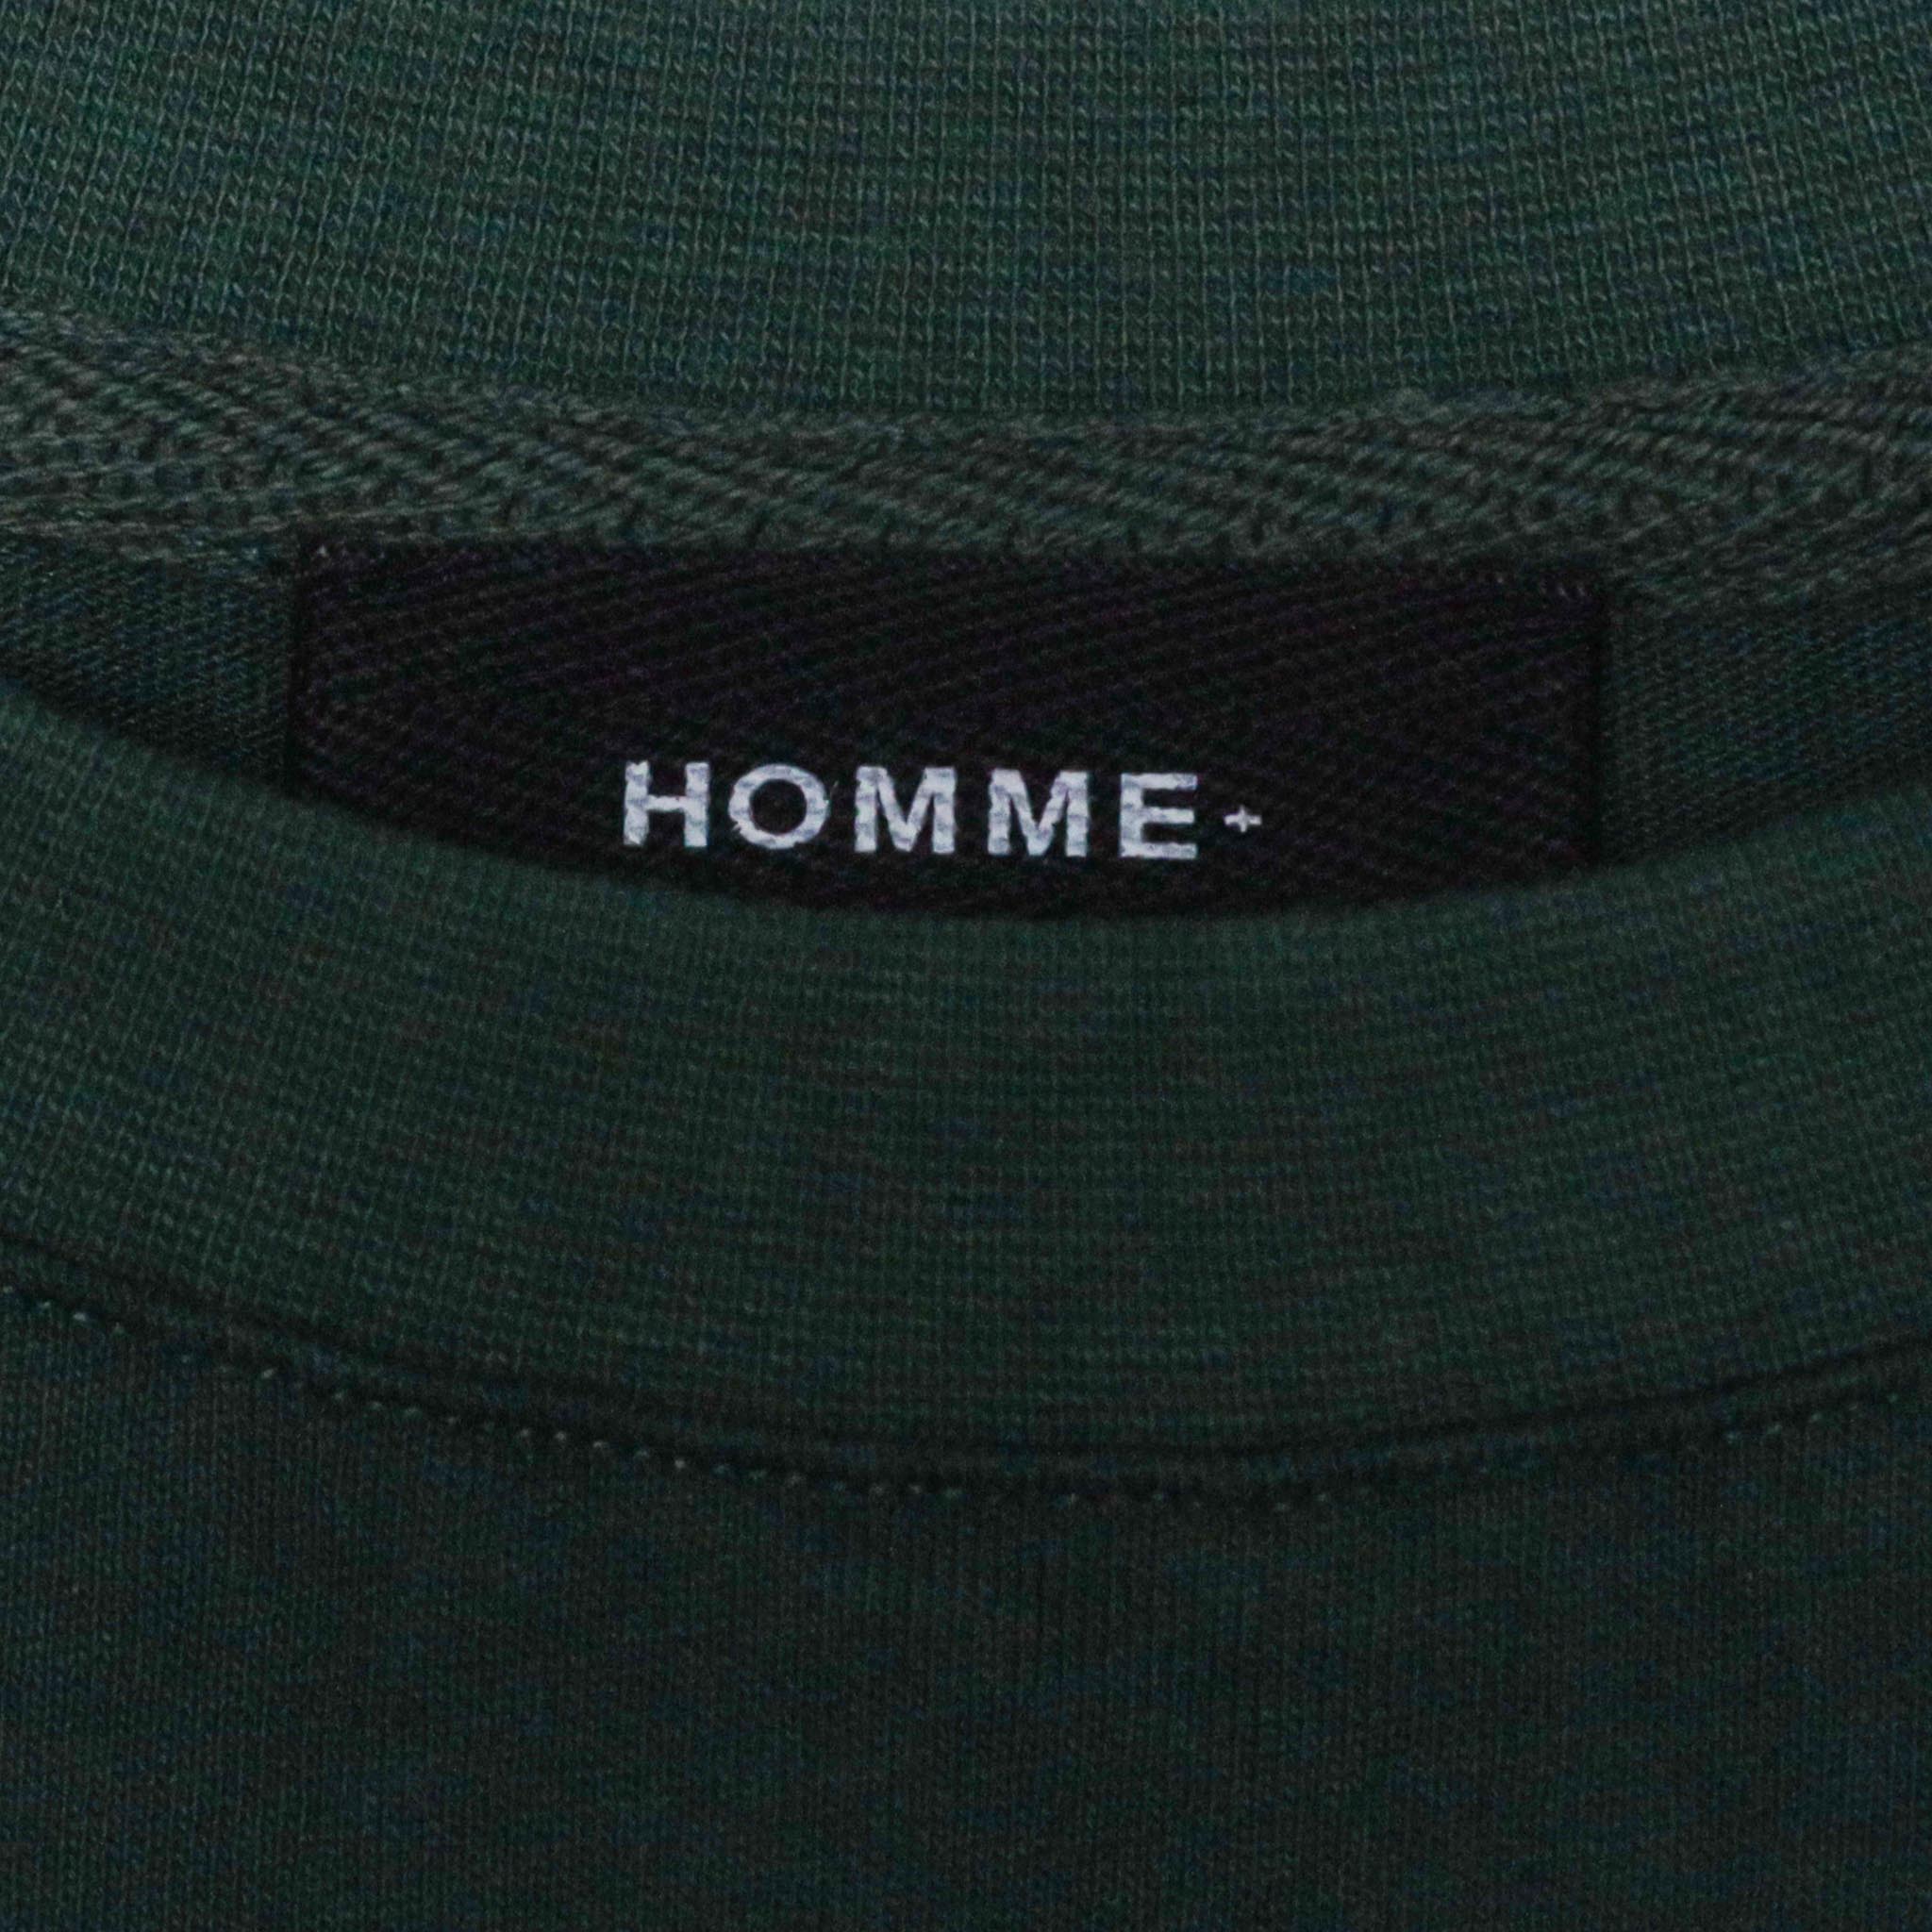 HOMME+ HOM:plus Tee Green Tea